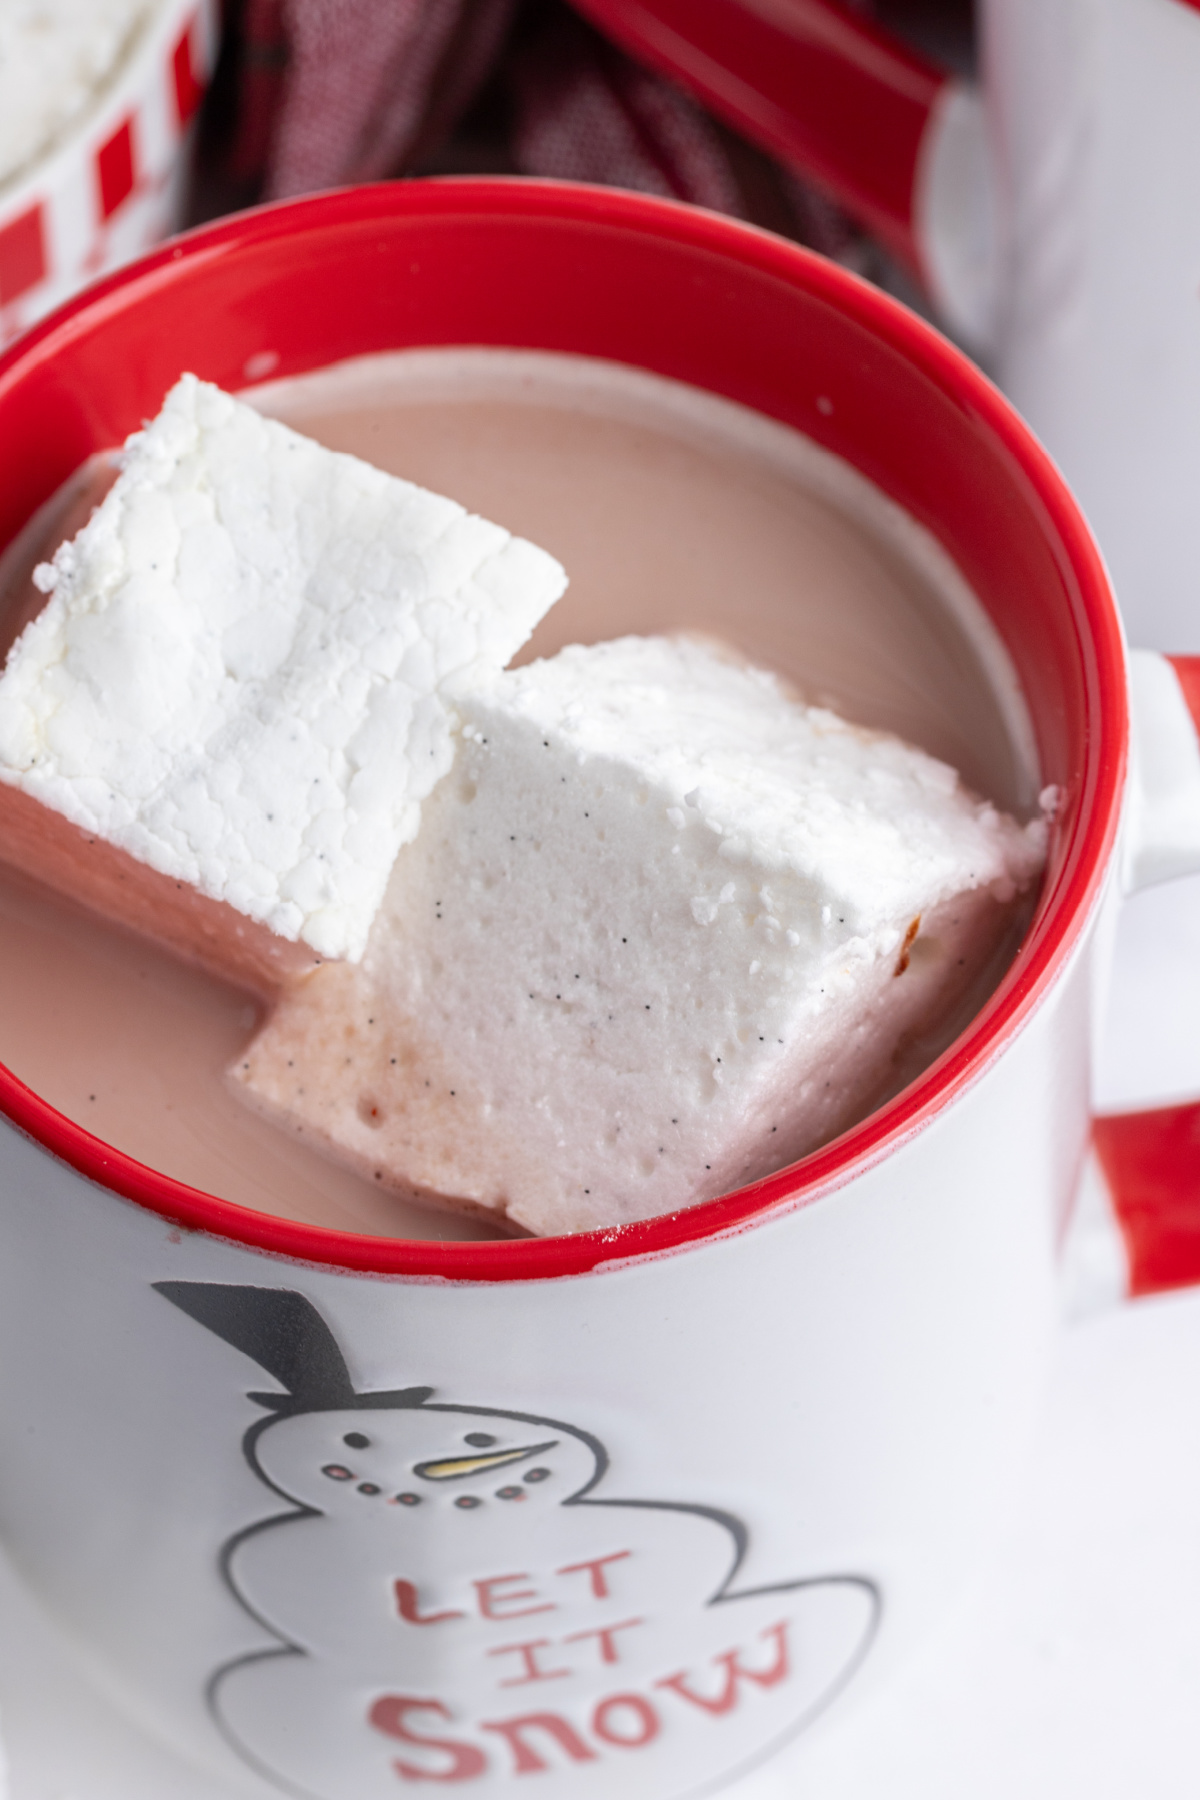 homemade marshmallows in a mug of hot chocolate